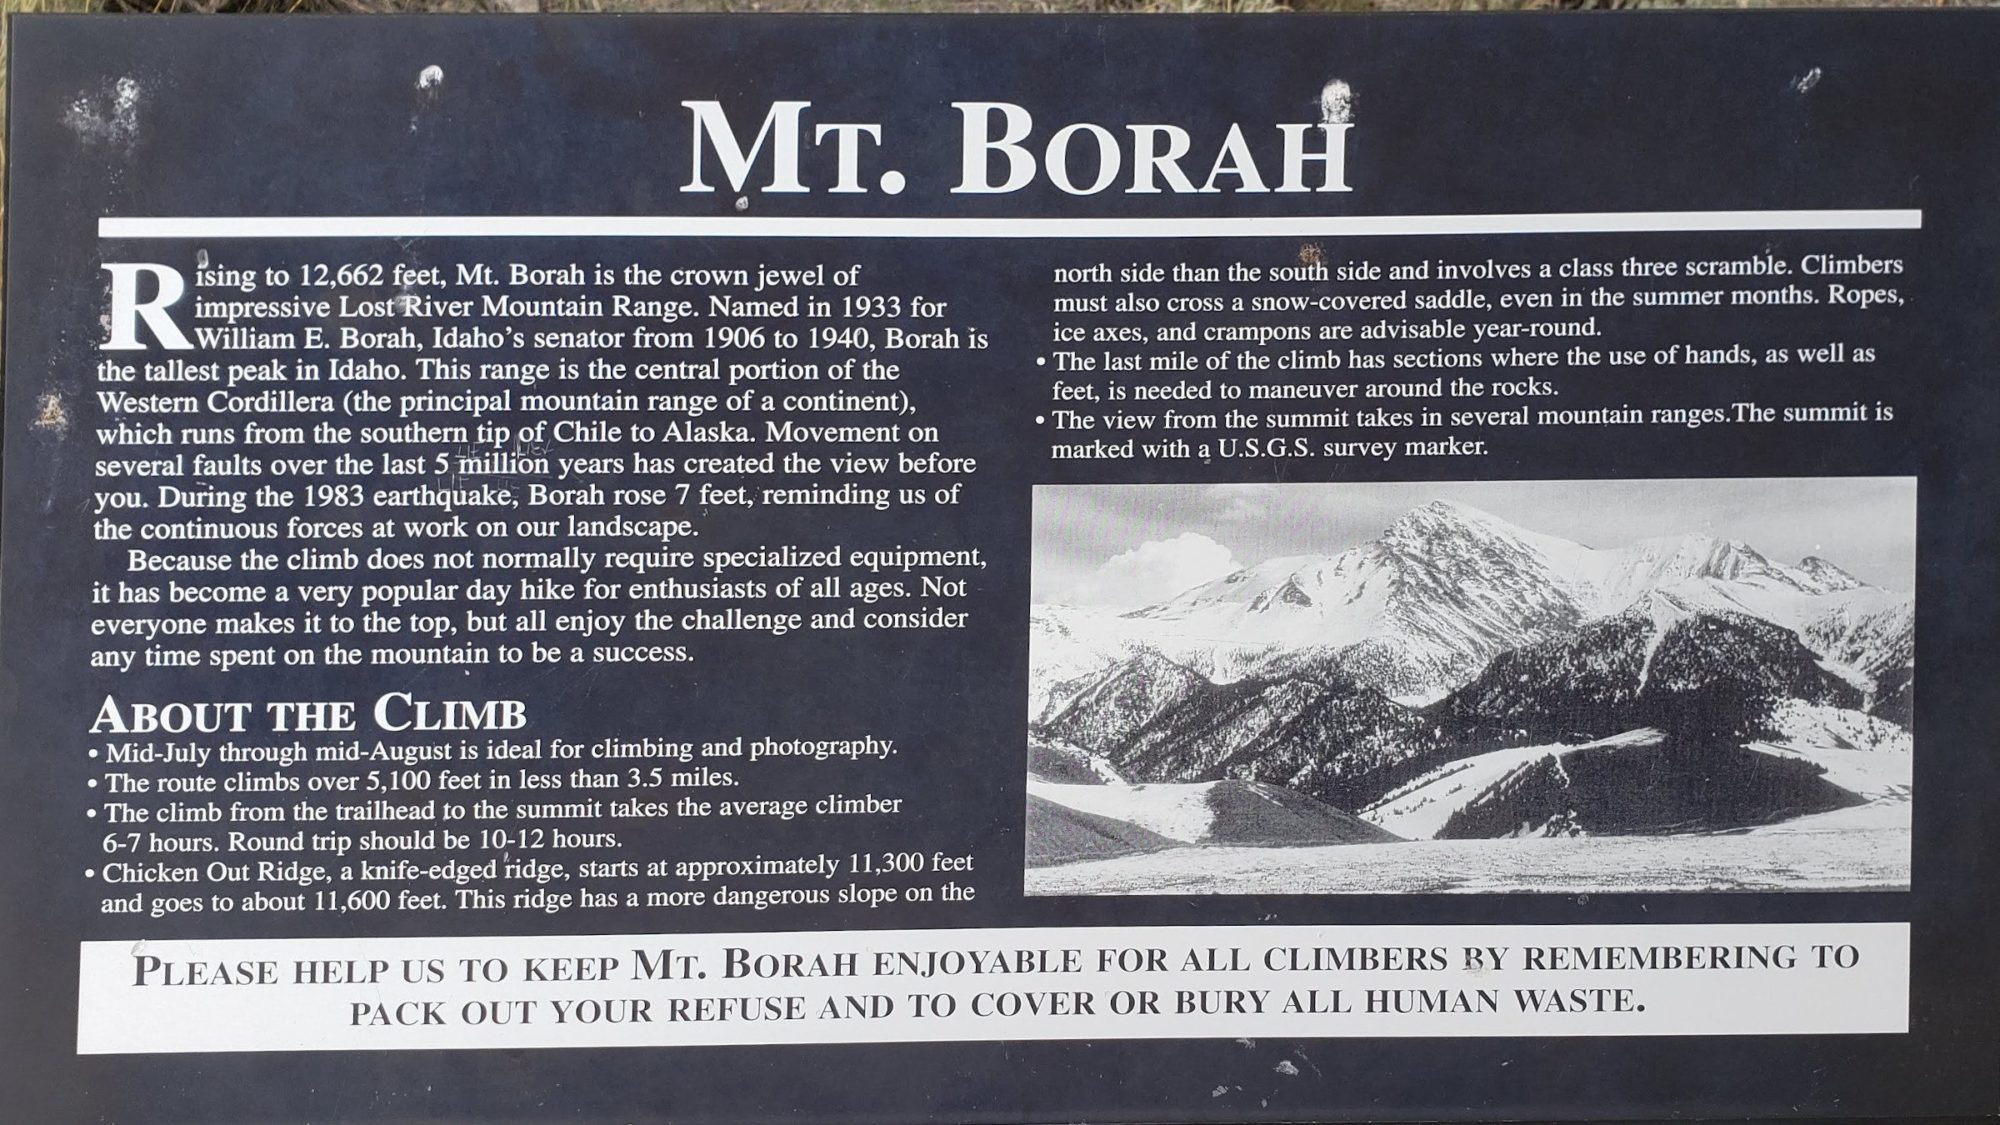 borah peak trail head sign